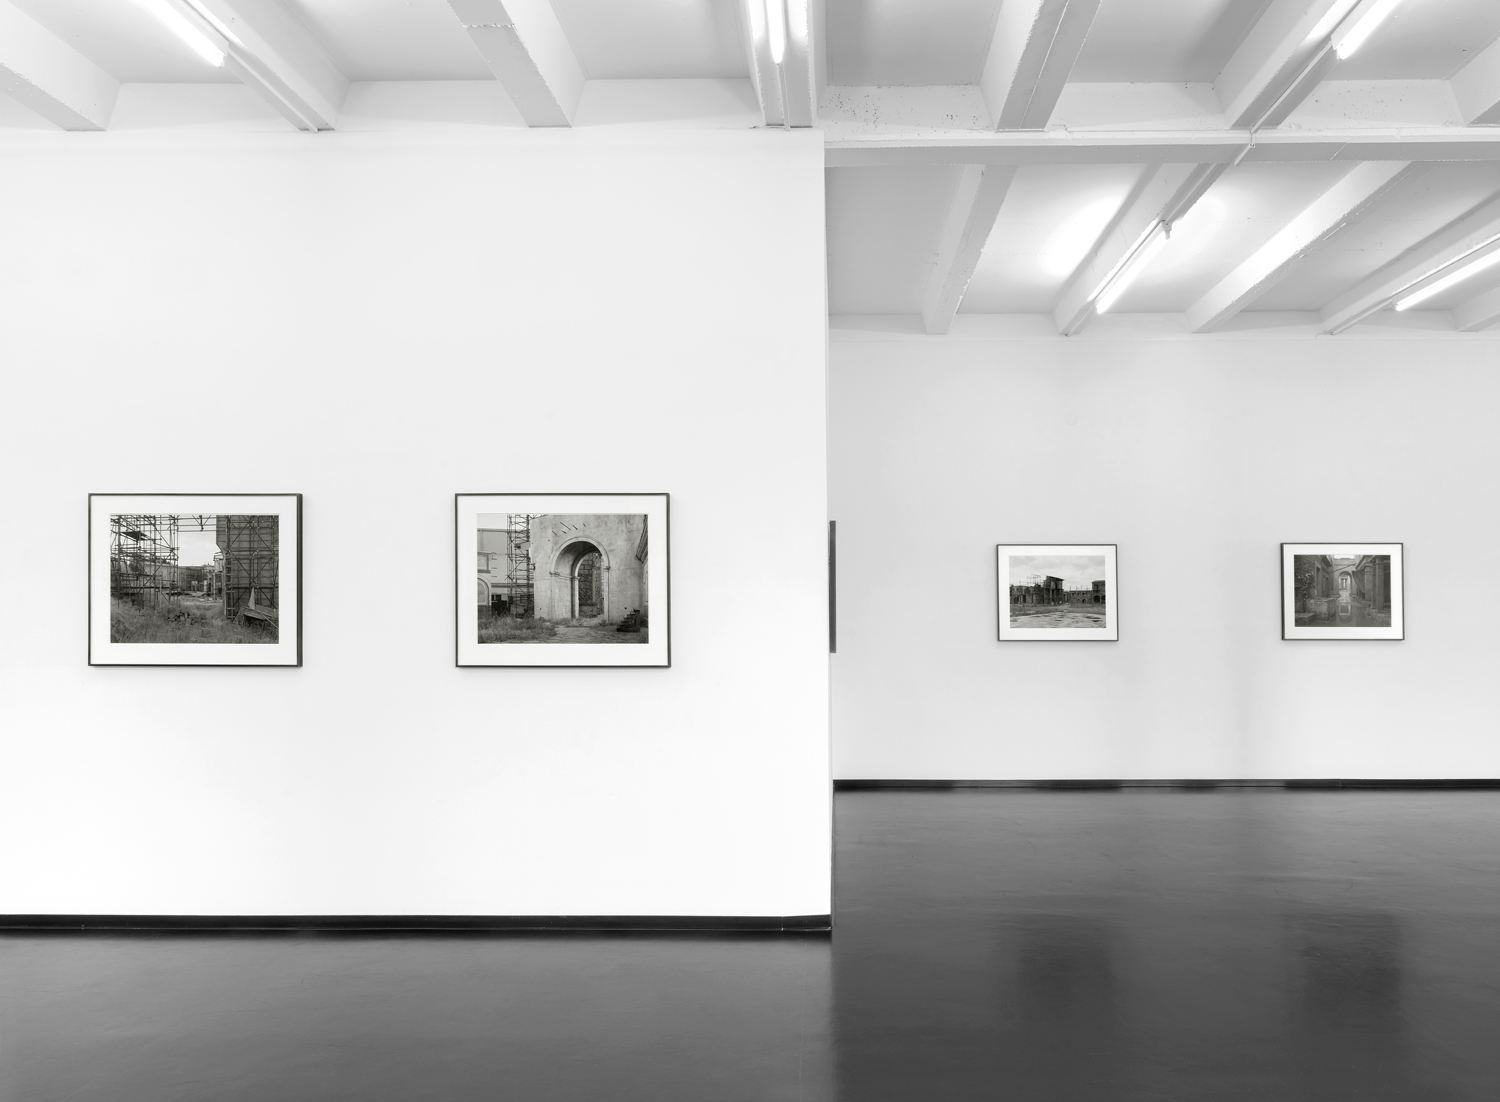 Gregory Crewdson, "Sanctuary", Galerie Wilma Tolksdorf, Frankfurt/M.